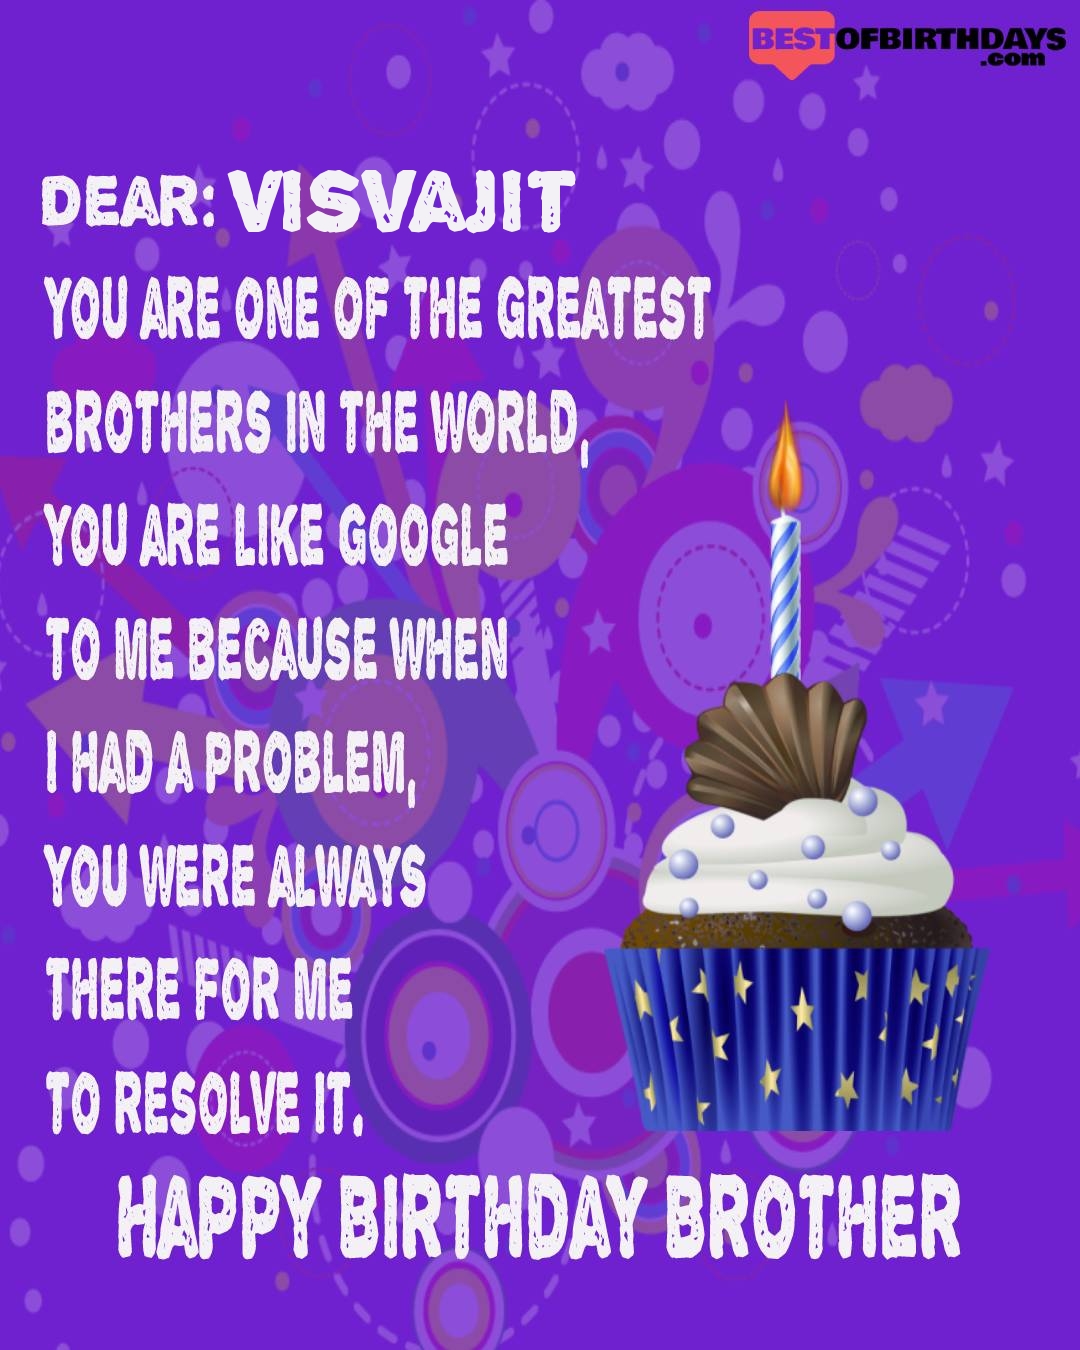 Happy birthday visvajit bhai brother bro